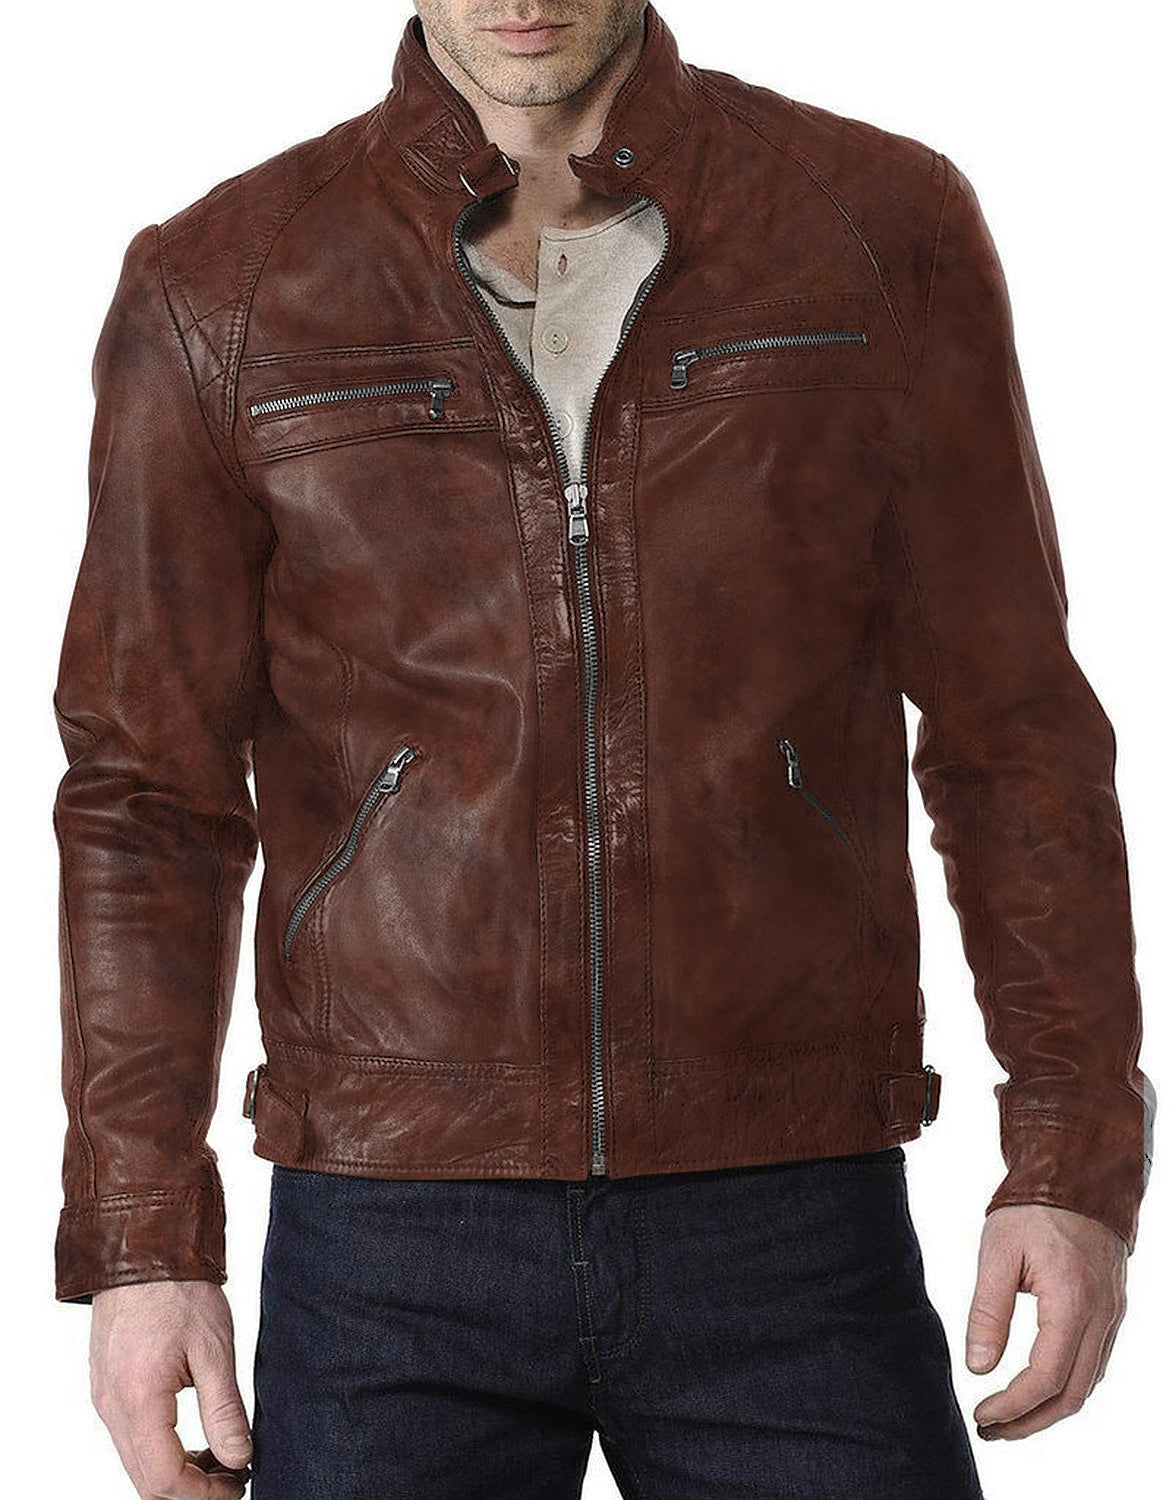 Leather Jackets Hub Mens Genuine Lambskin Leather Jacket (Black, Racer Jacket) - 1501018